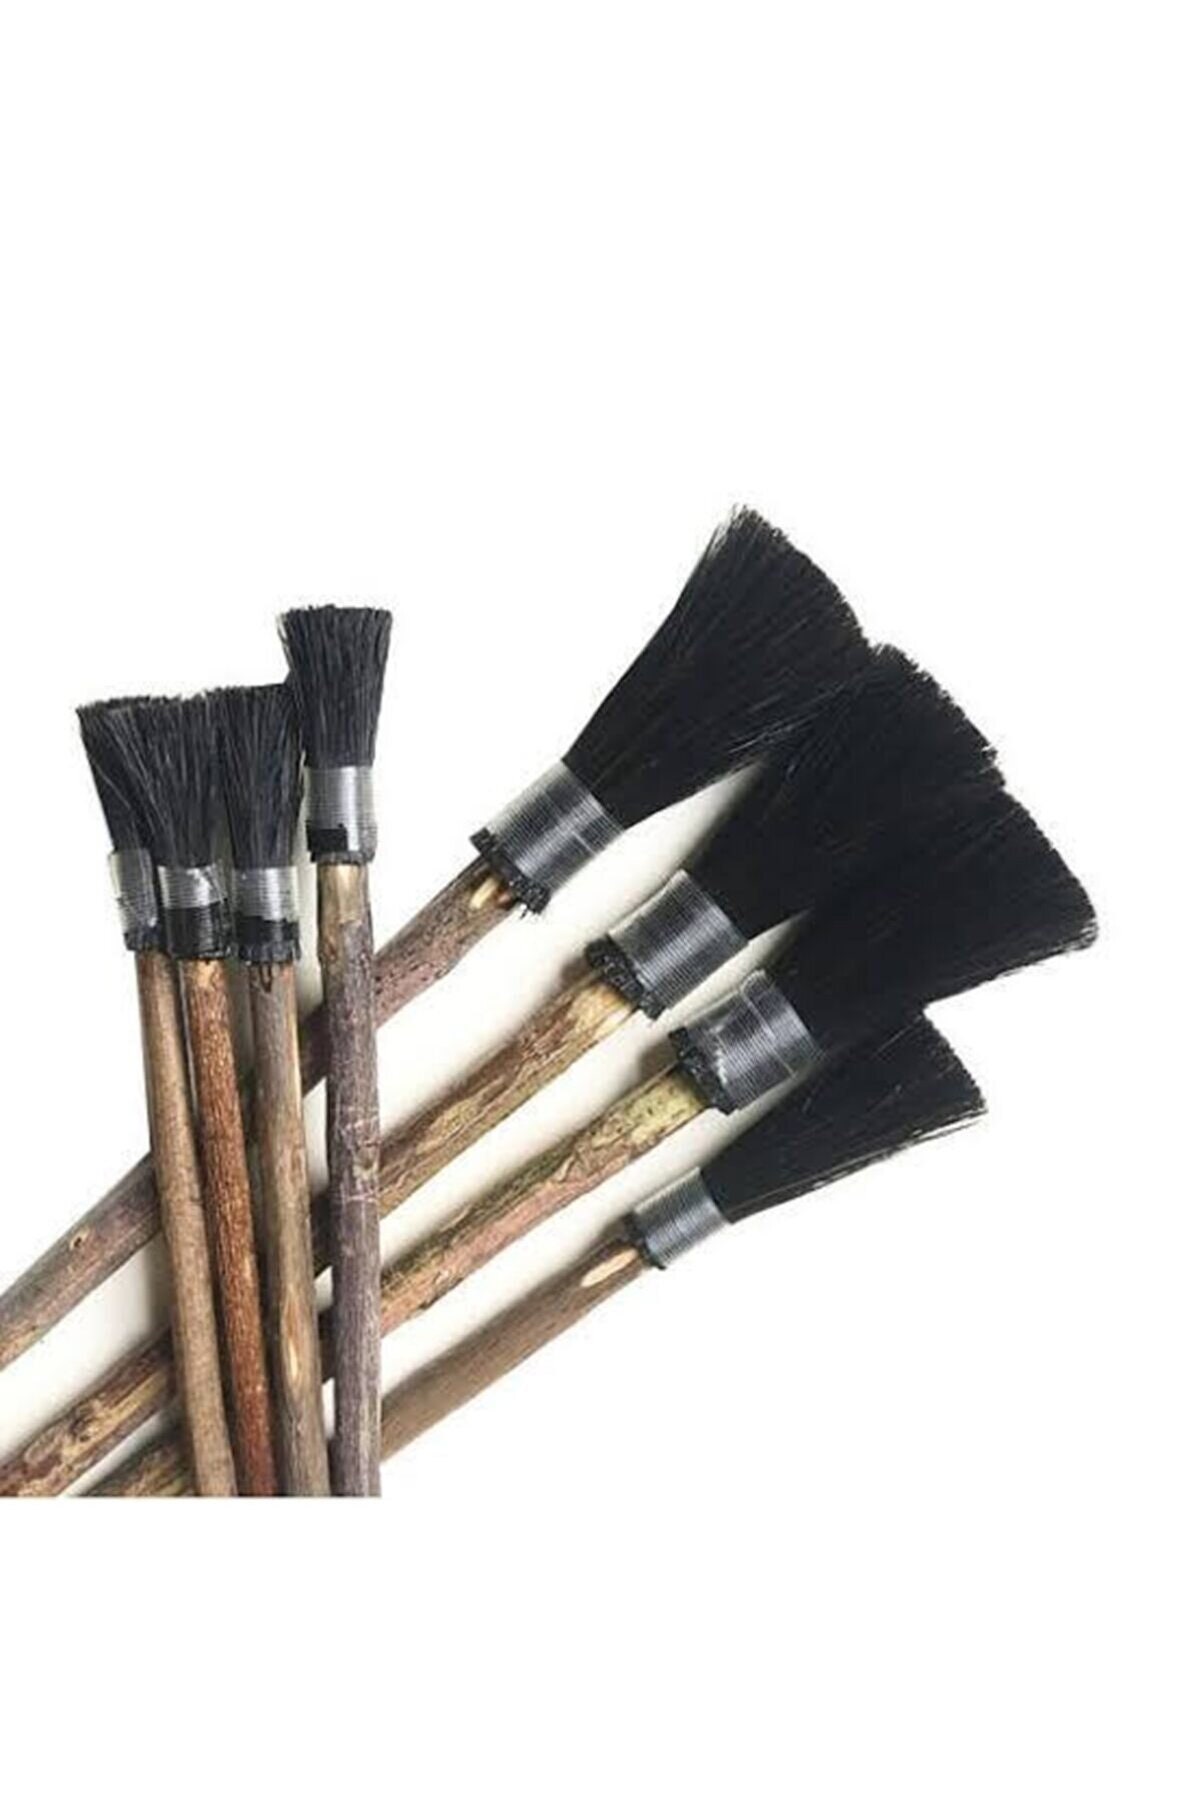 ARTIFY Drybrush Set Dry Brushes: Professional-Grade Sri Lanka